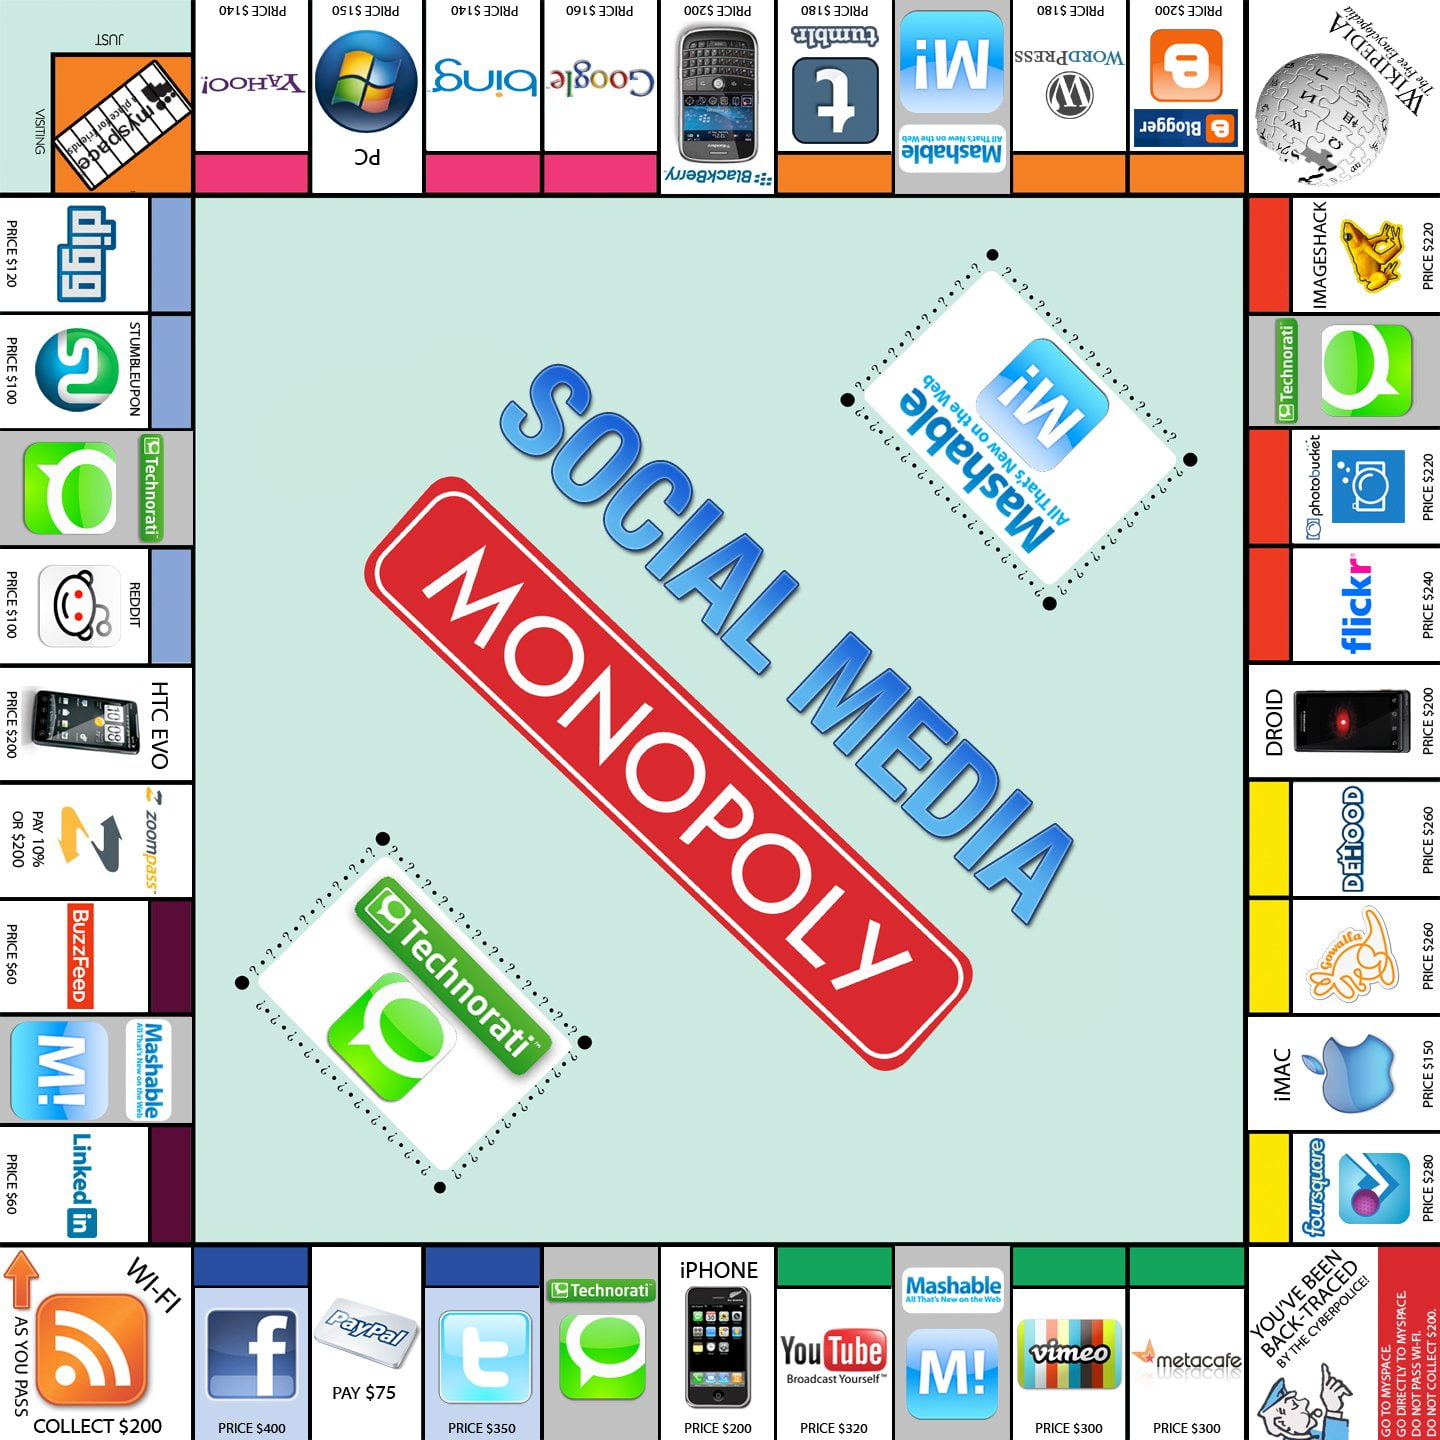 board, computer, game, internet, media, monopoly, poster, social